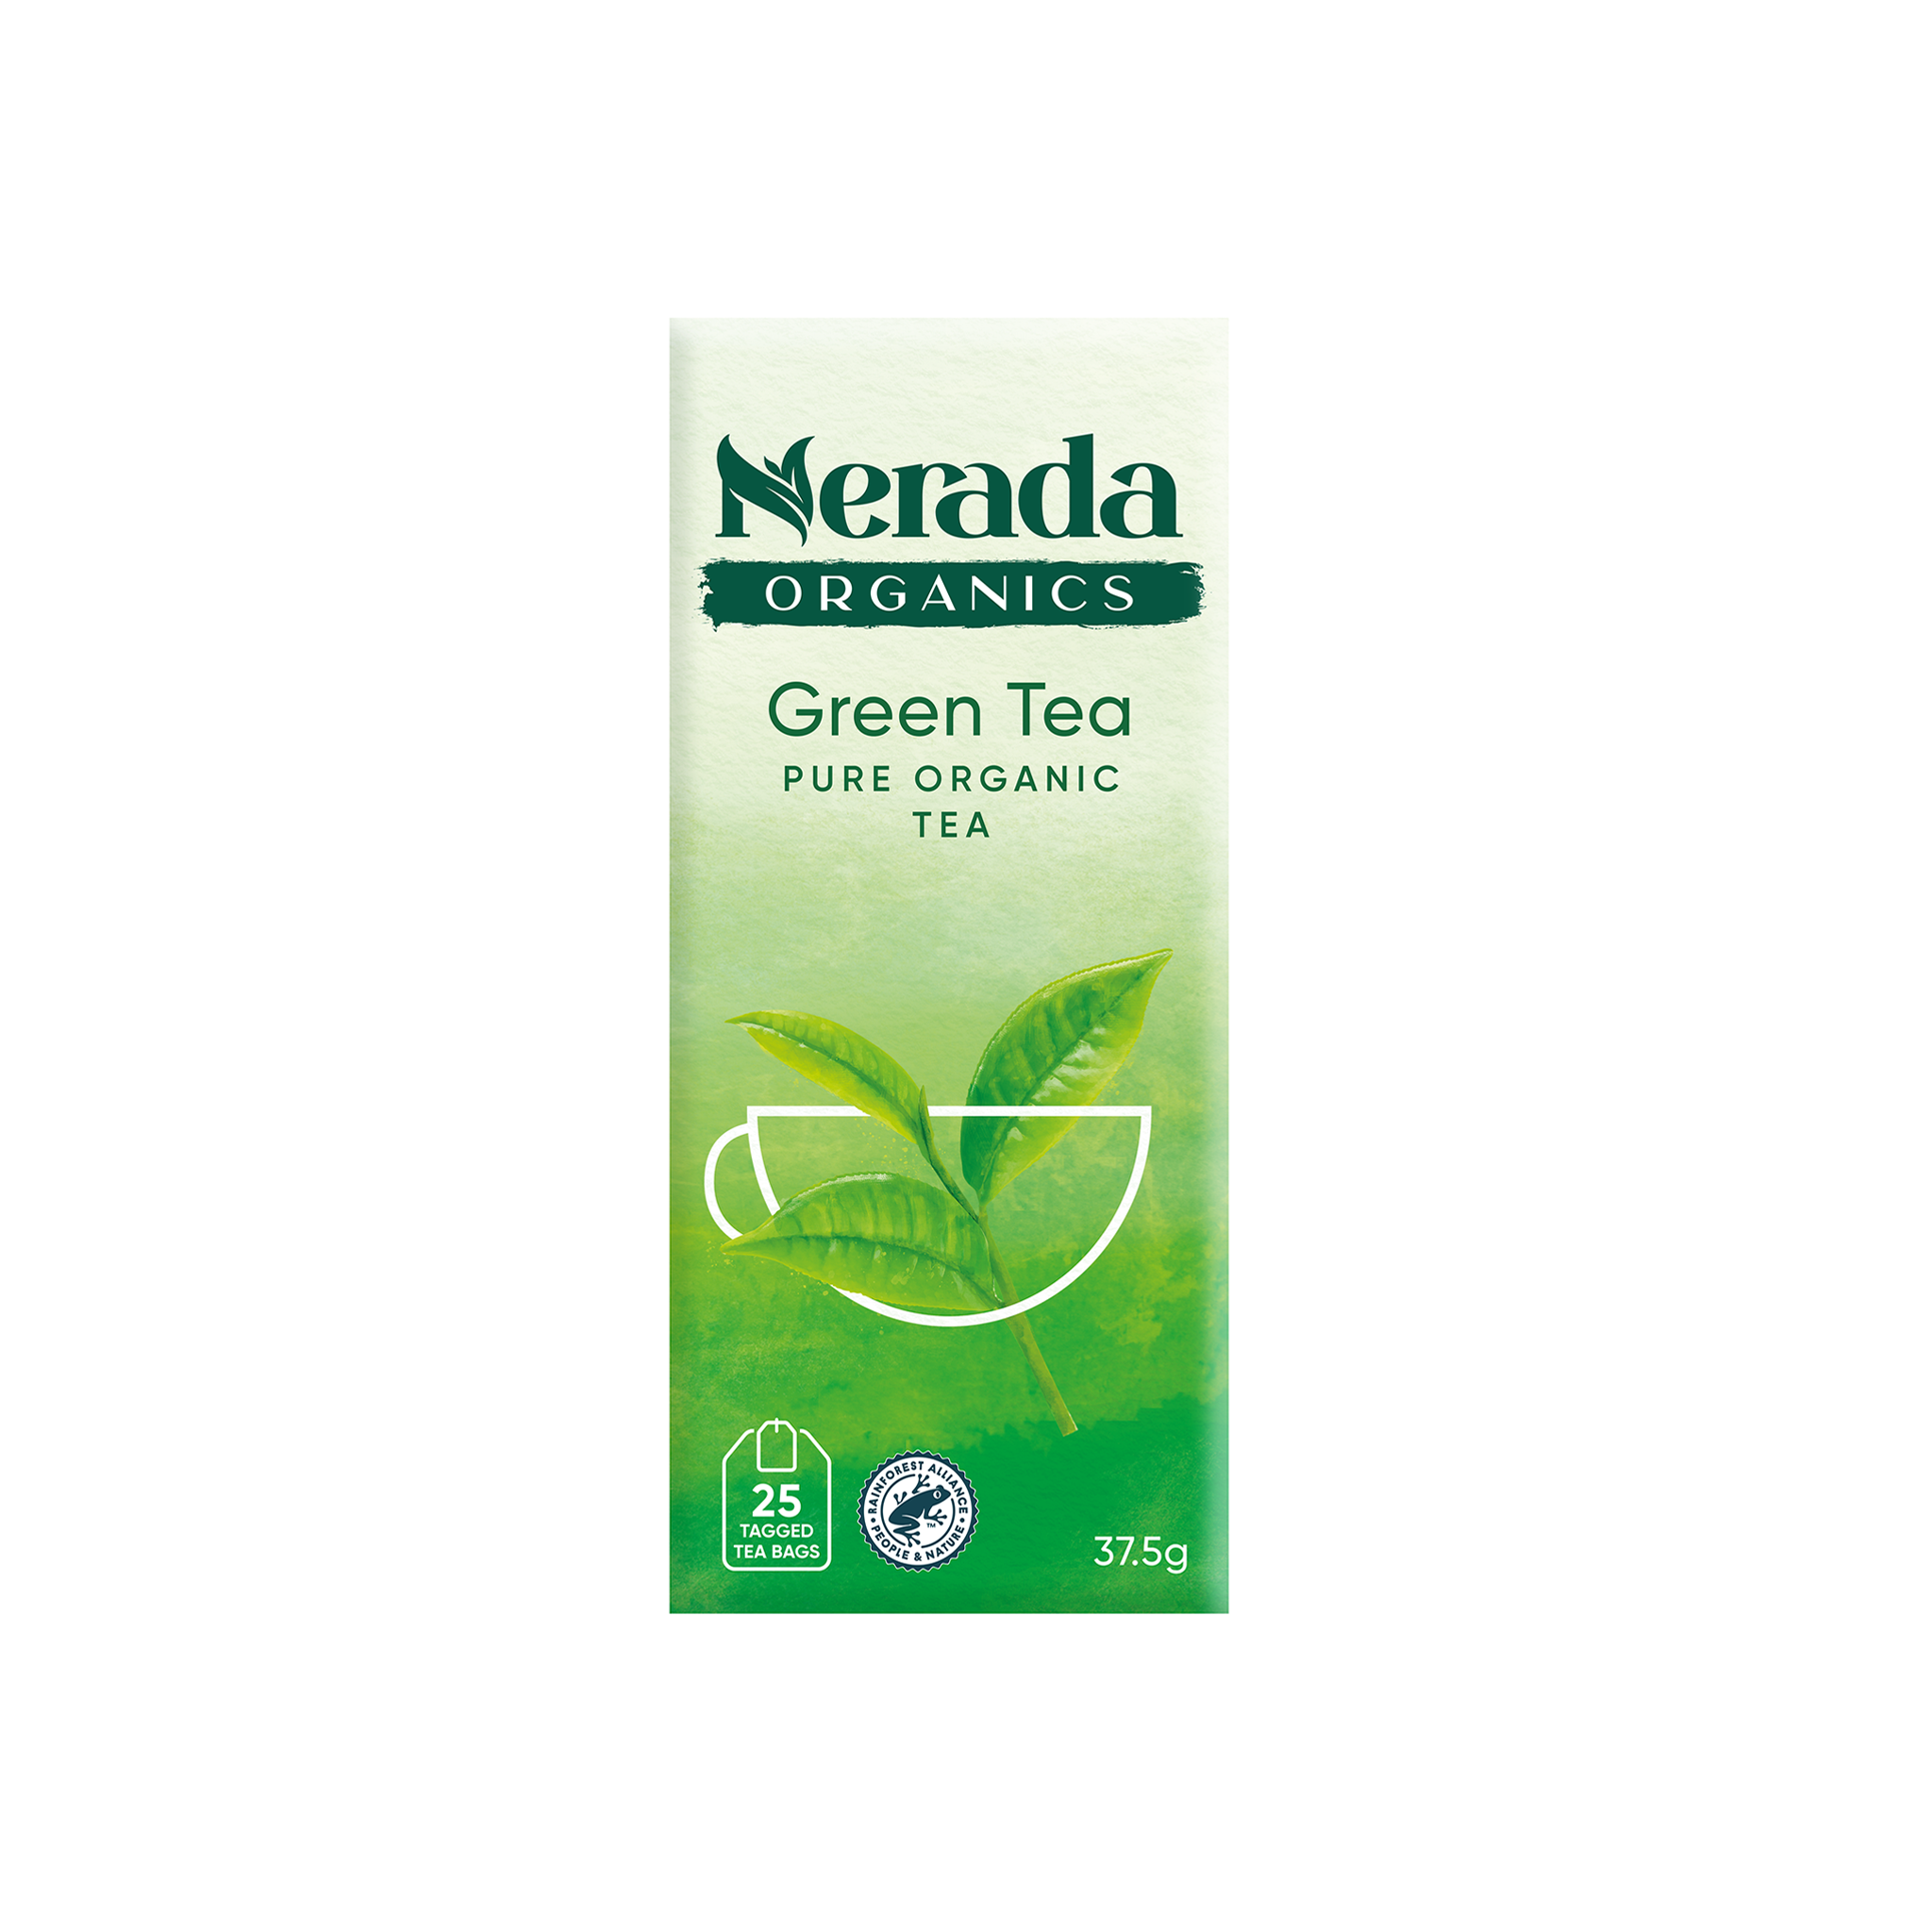 Green Tea Organic Tea Bags 25 pack